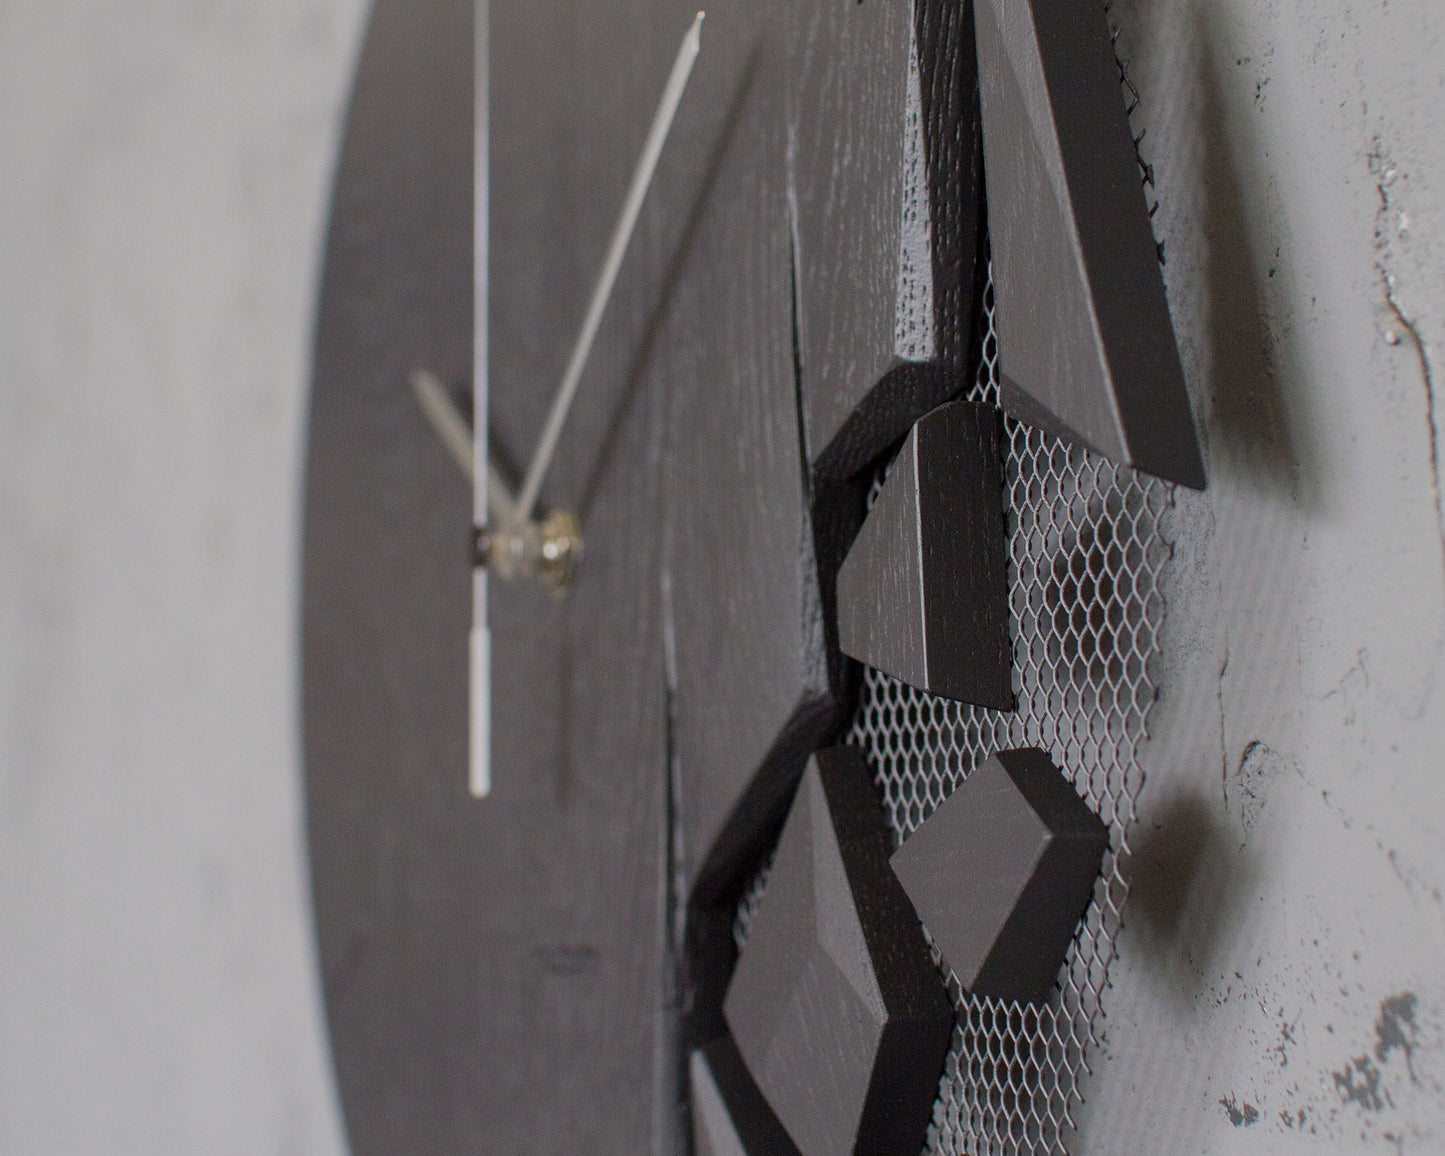 VREME monochrome wall clock, оак